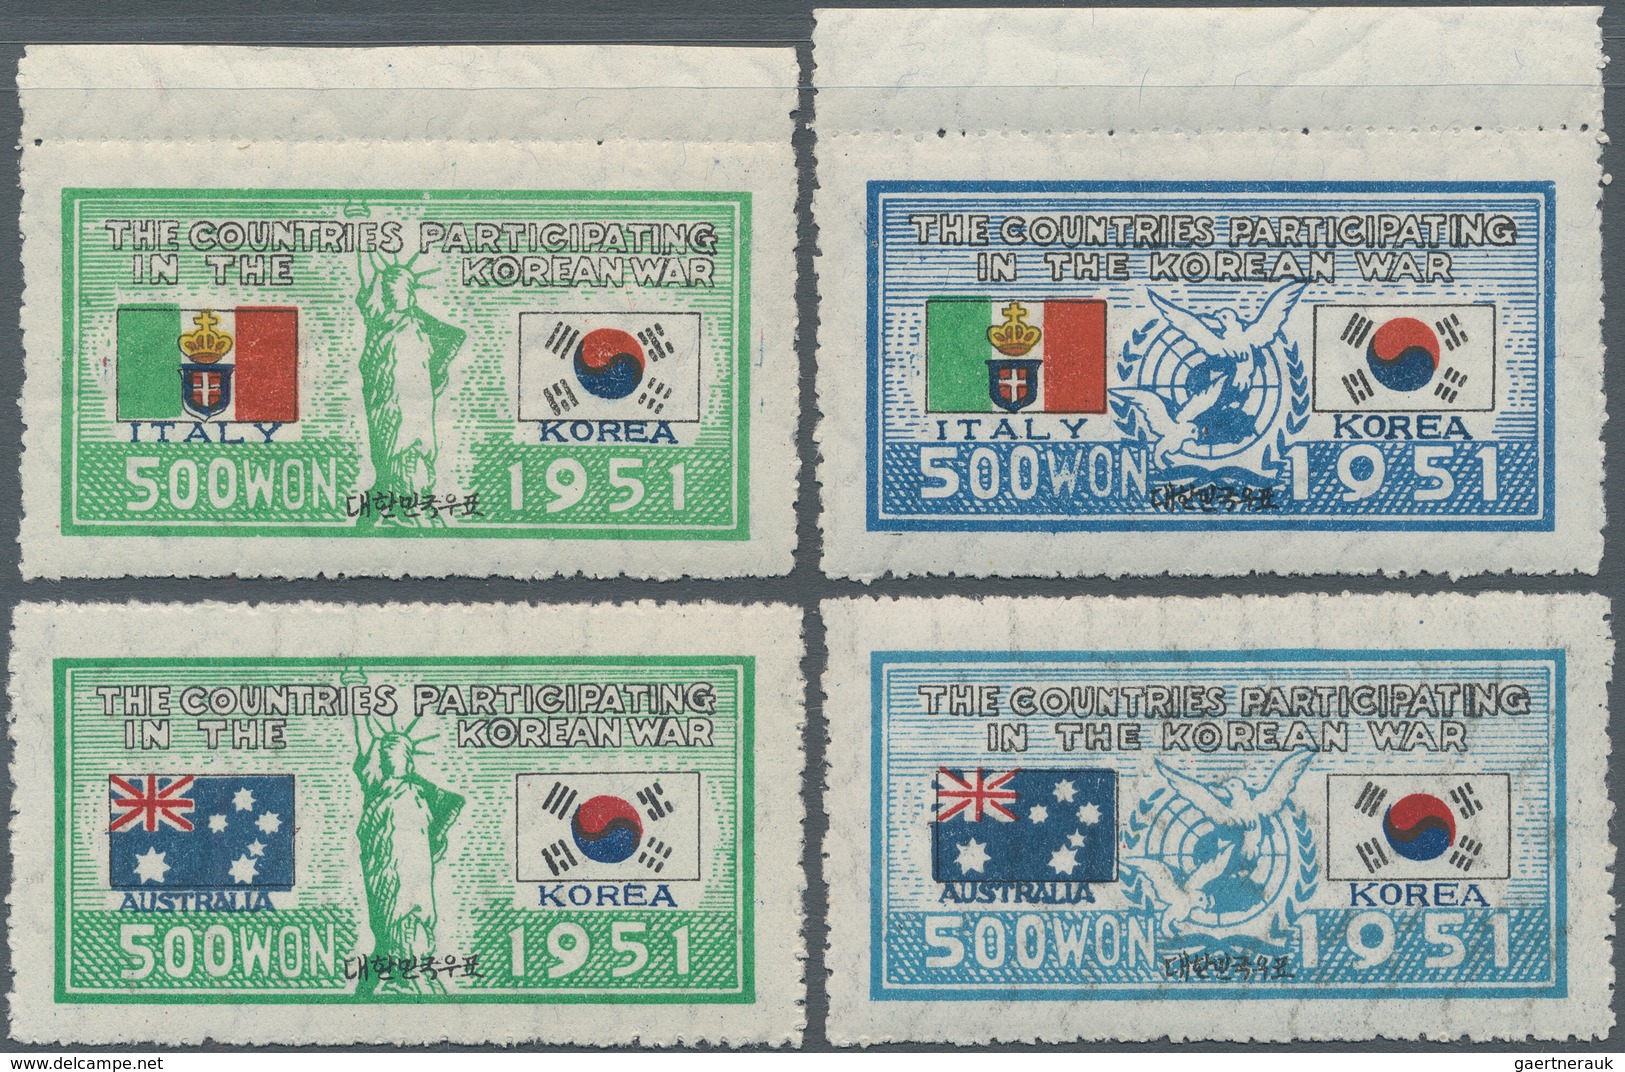 Korea-Süd: 1951, Flag Set Of 44 Vals. Inc. Italy Both Old And New Flag, Mint Never Hinged MNH, 4 Set - Korea, South